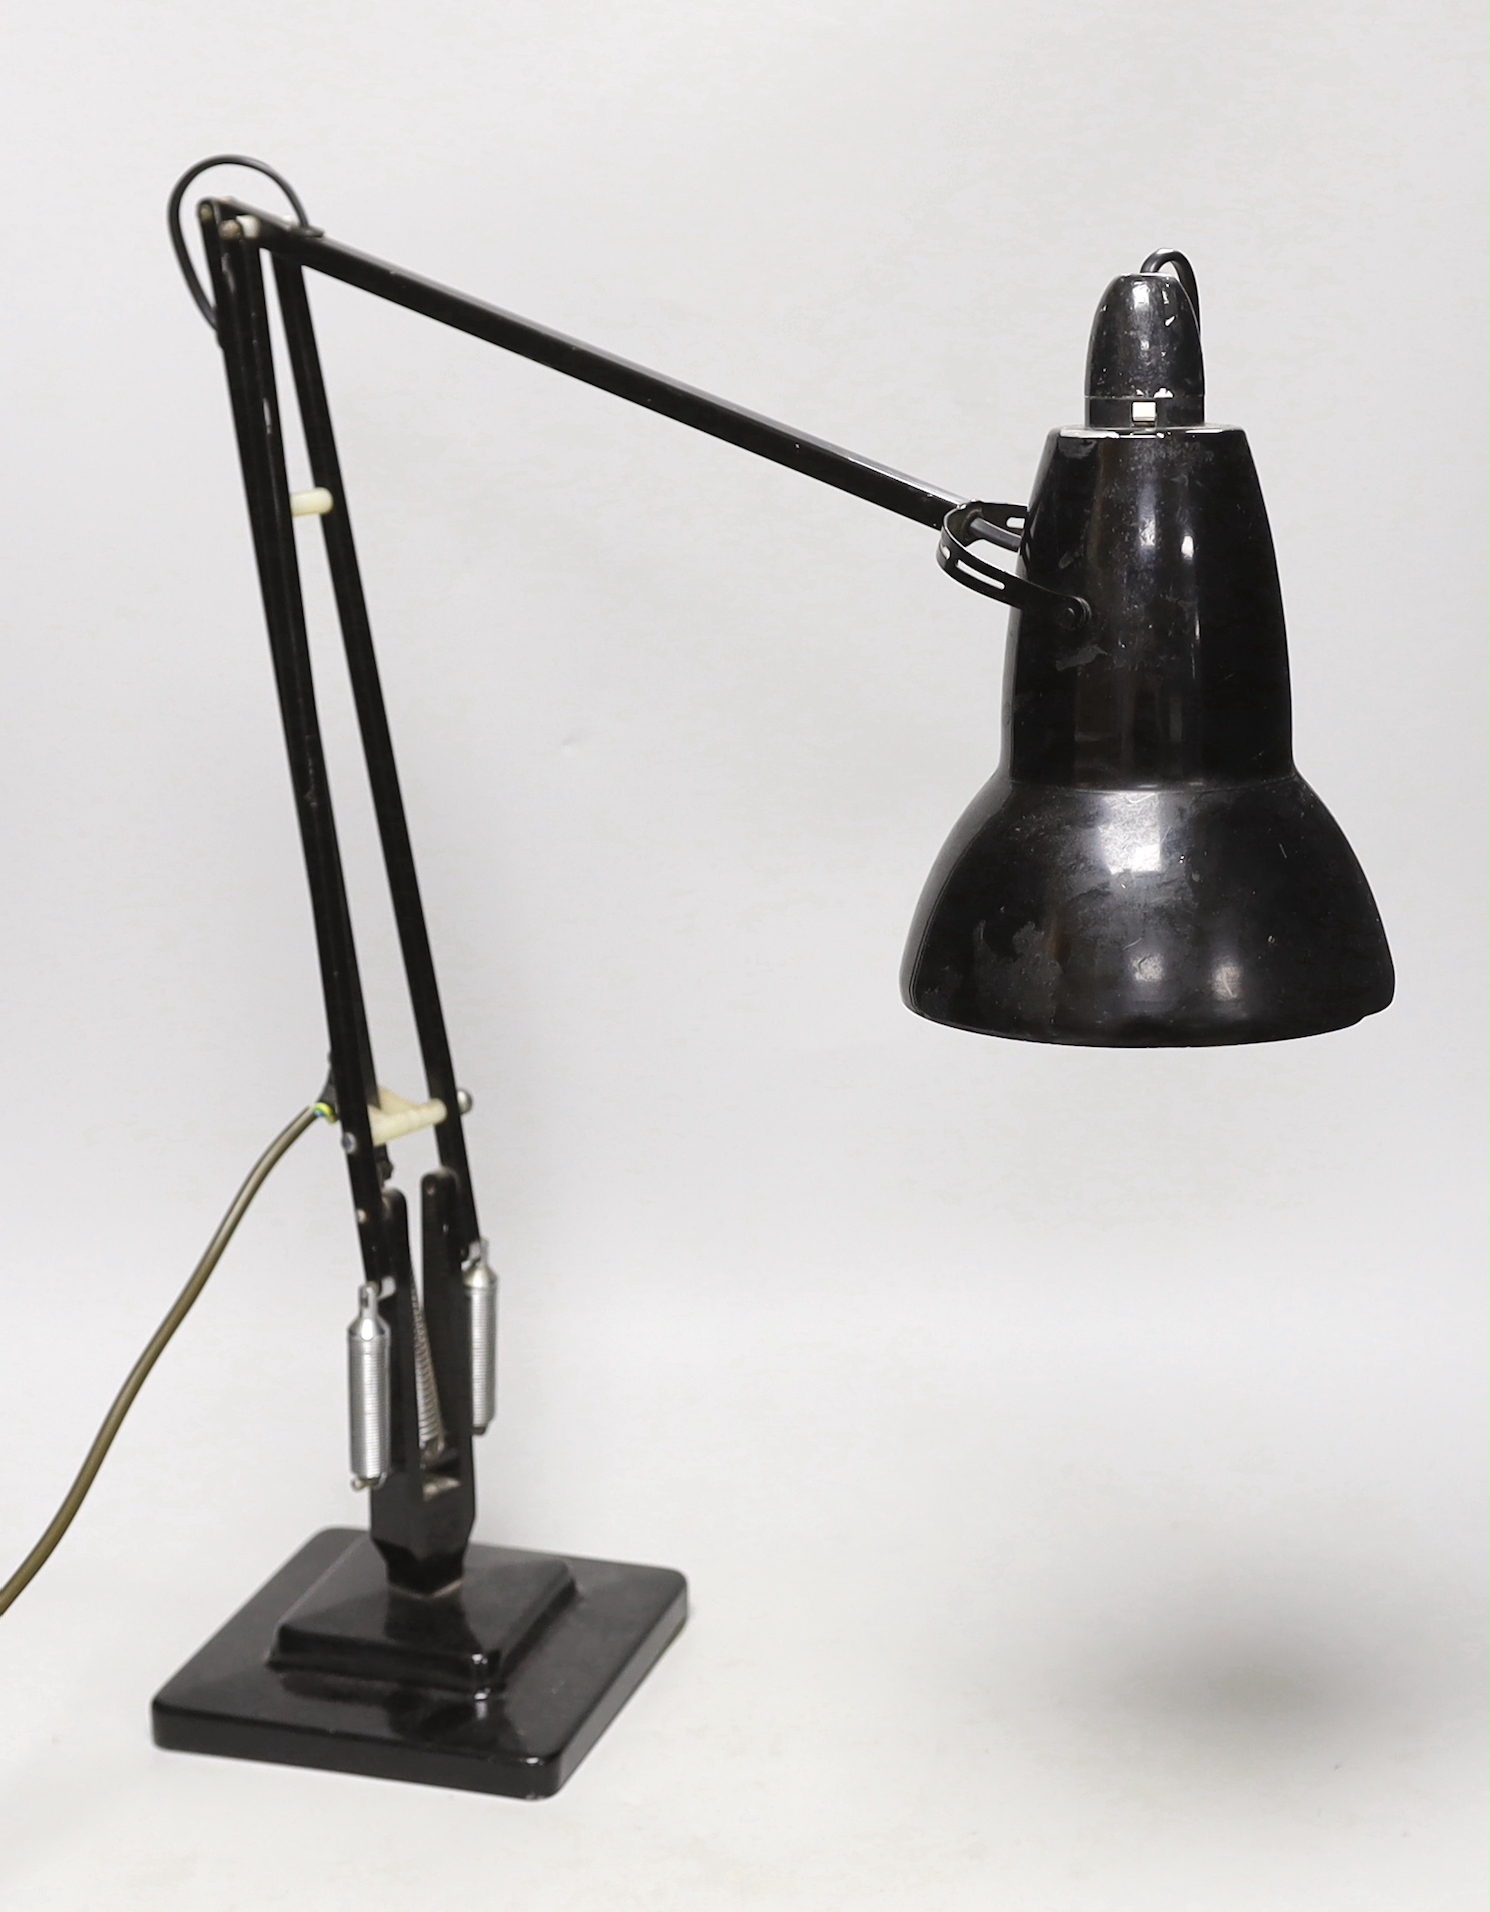 An anglepoise lamp